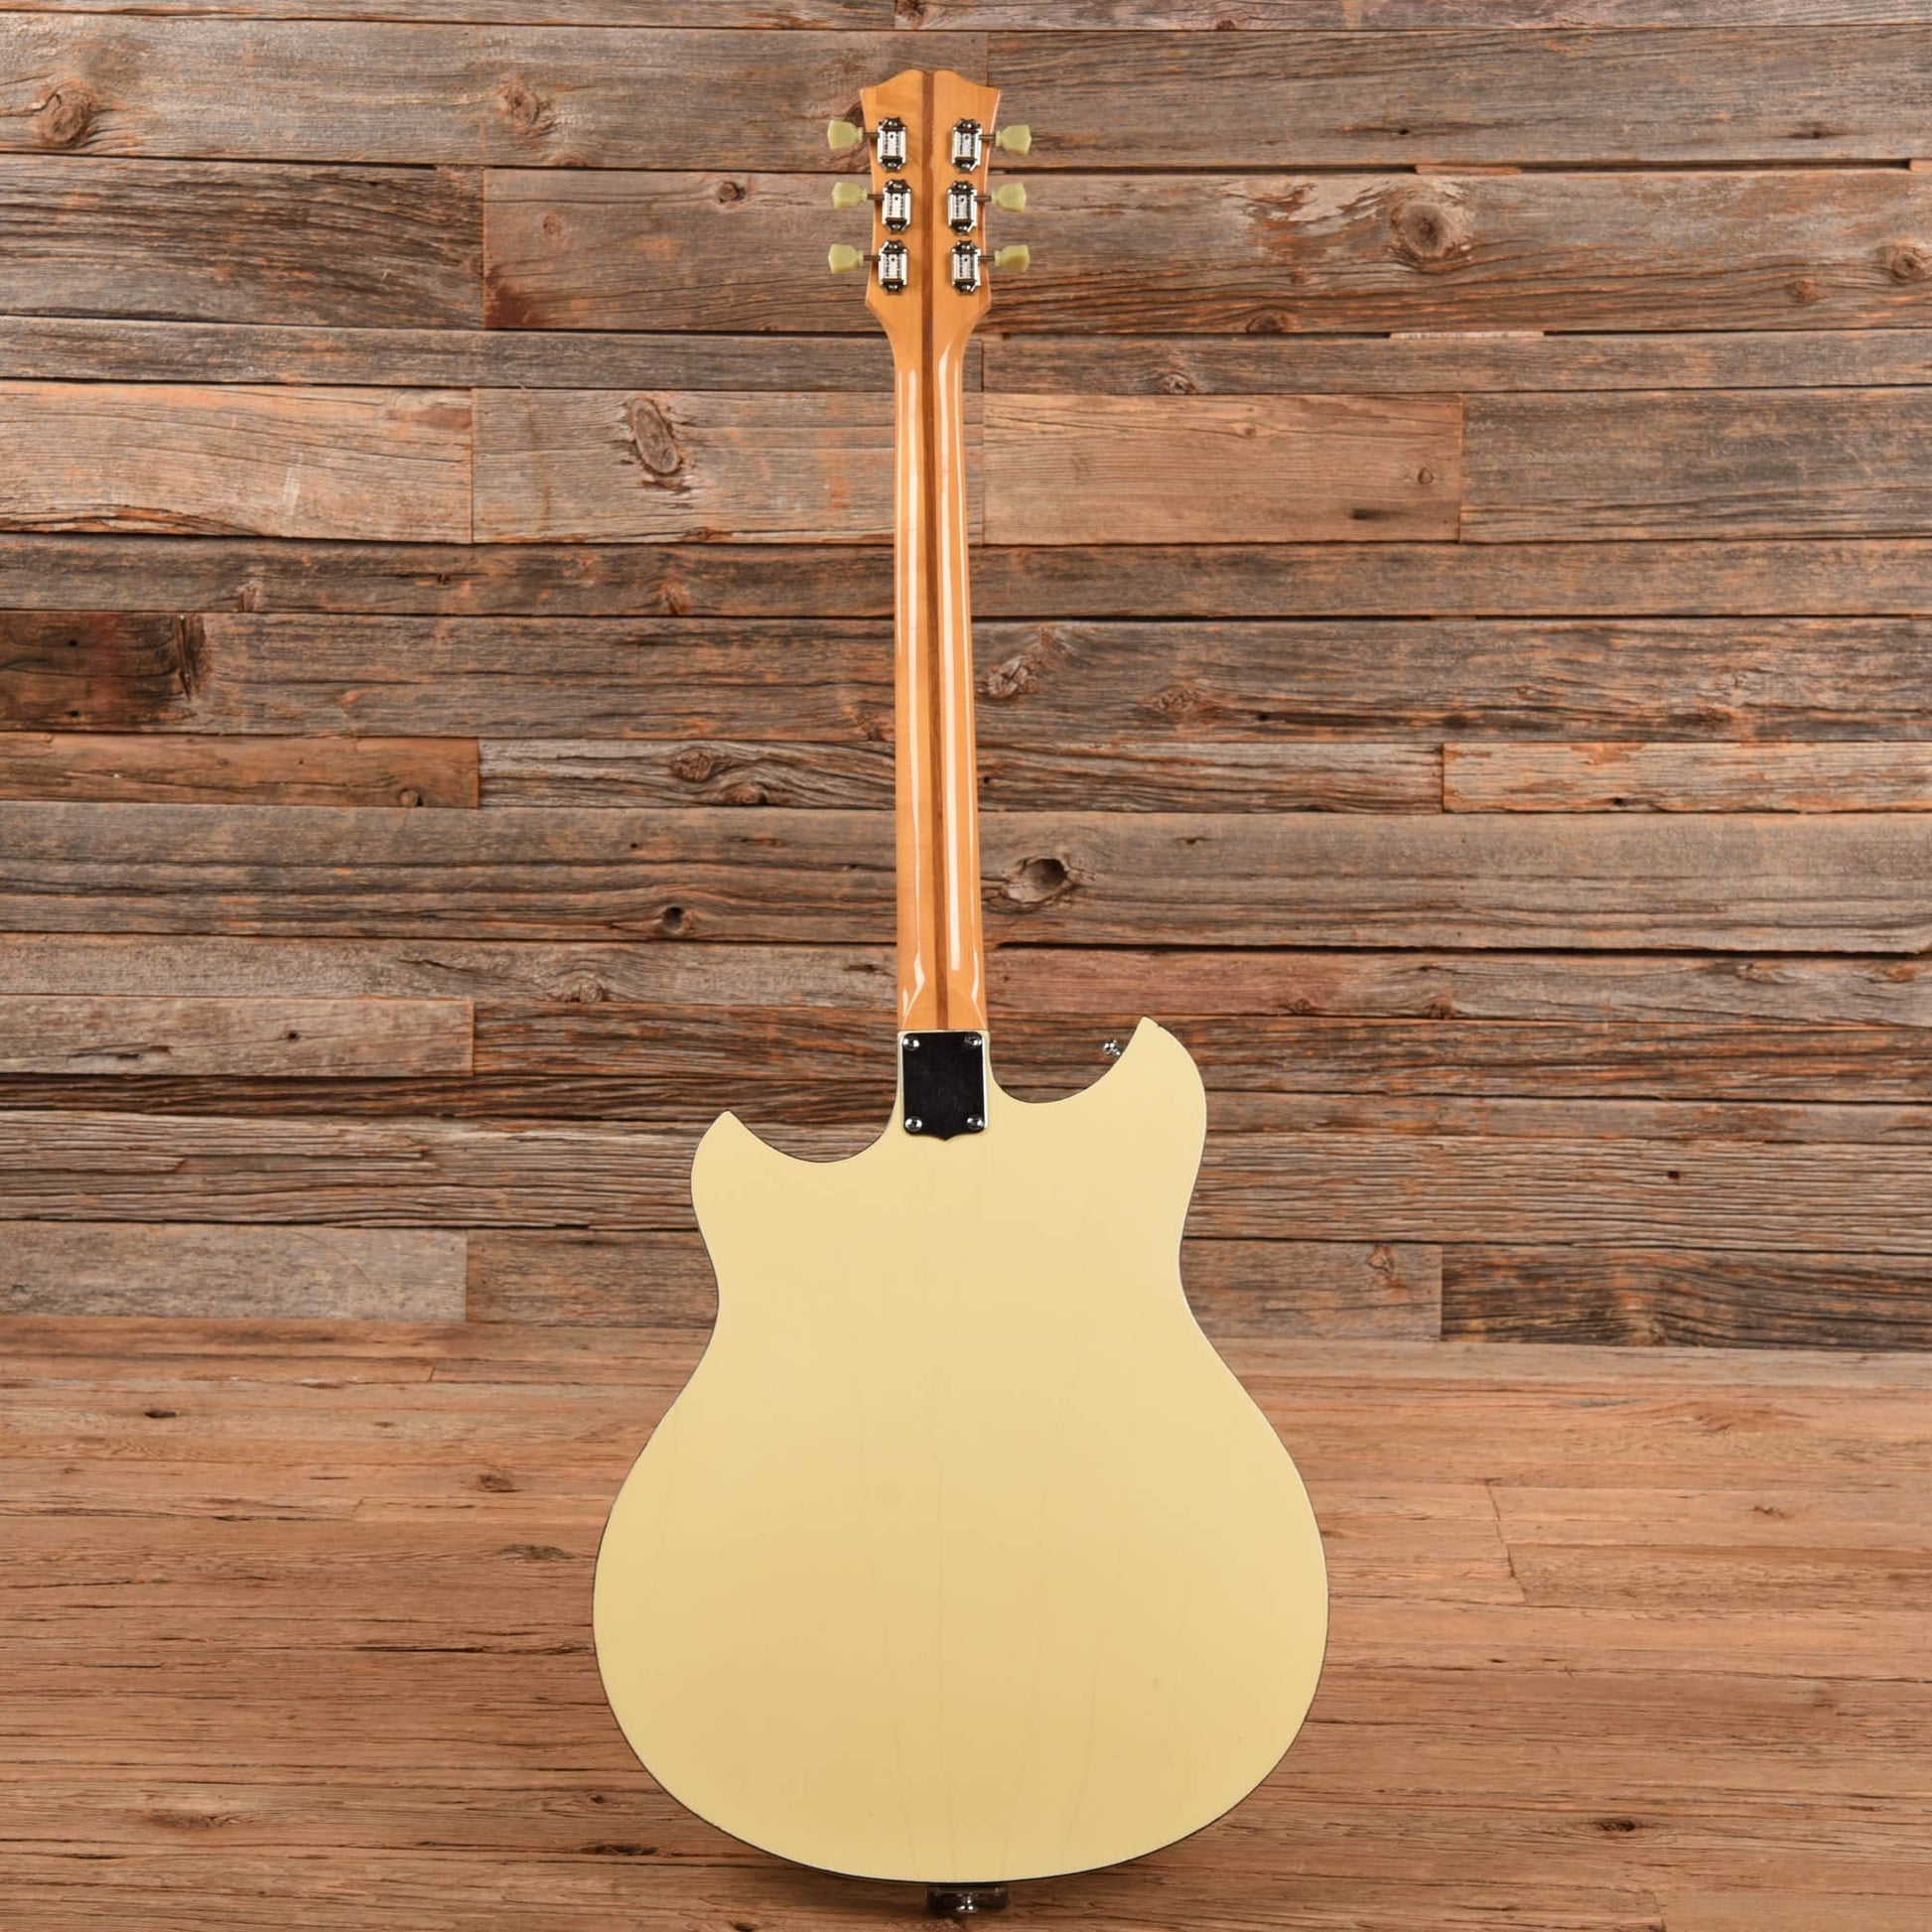 Kent Model 820 White 1960s Electric Guitars / Semi-Hollow